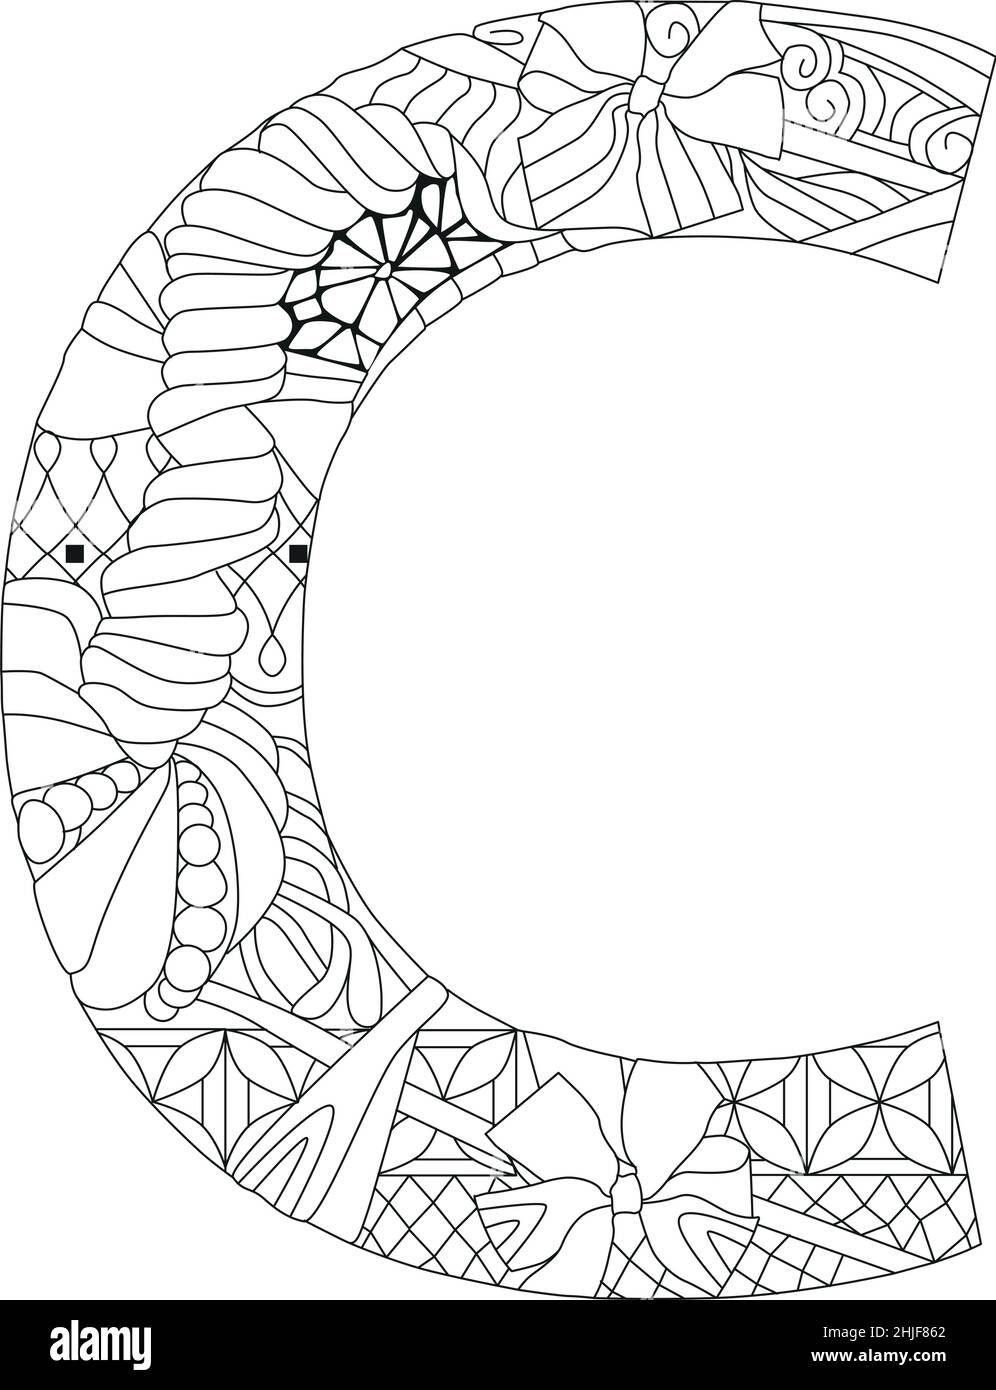 Zentangle stylized alphabet - letter C for coloring. Vector illustration. Ethnic pattern Stock Vector